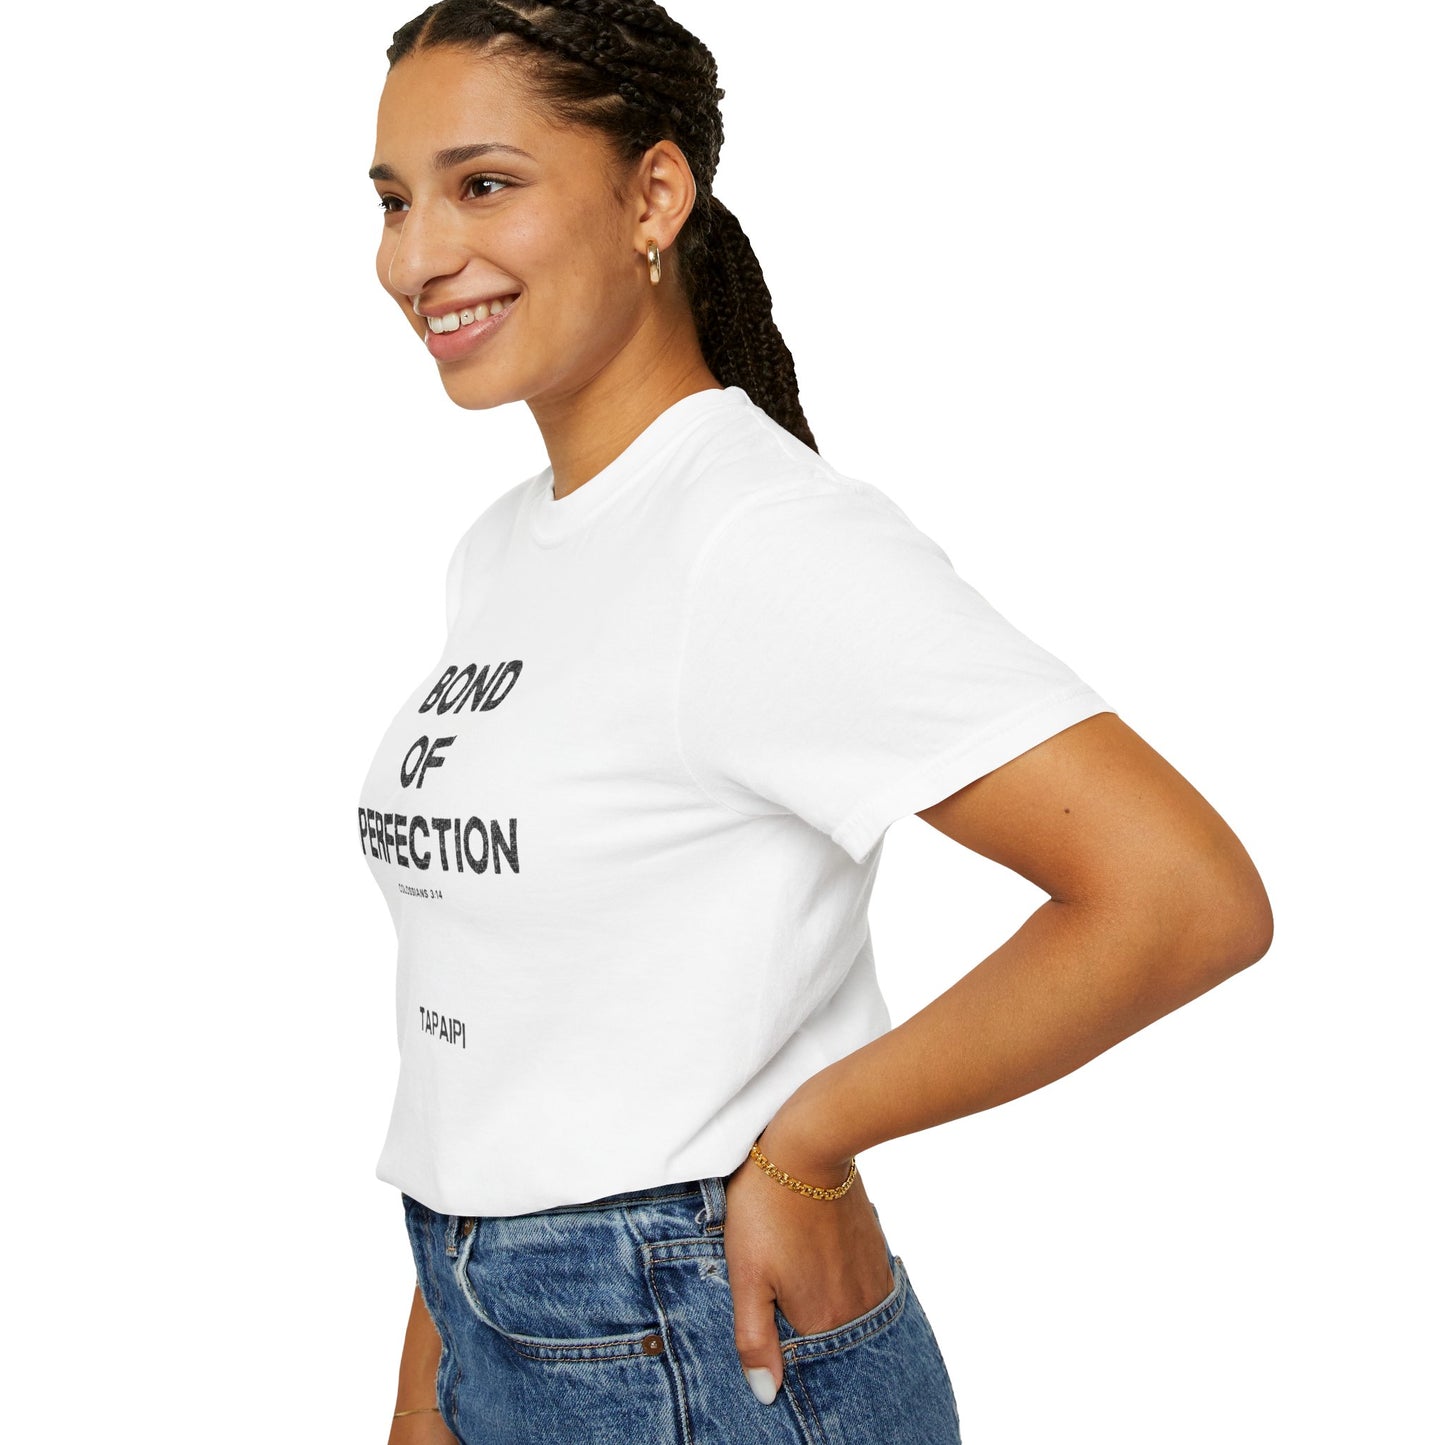 Bond Of Perfection Short Sleeve T-Shirt